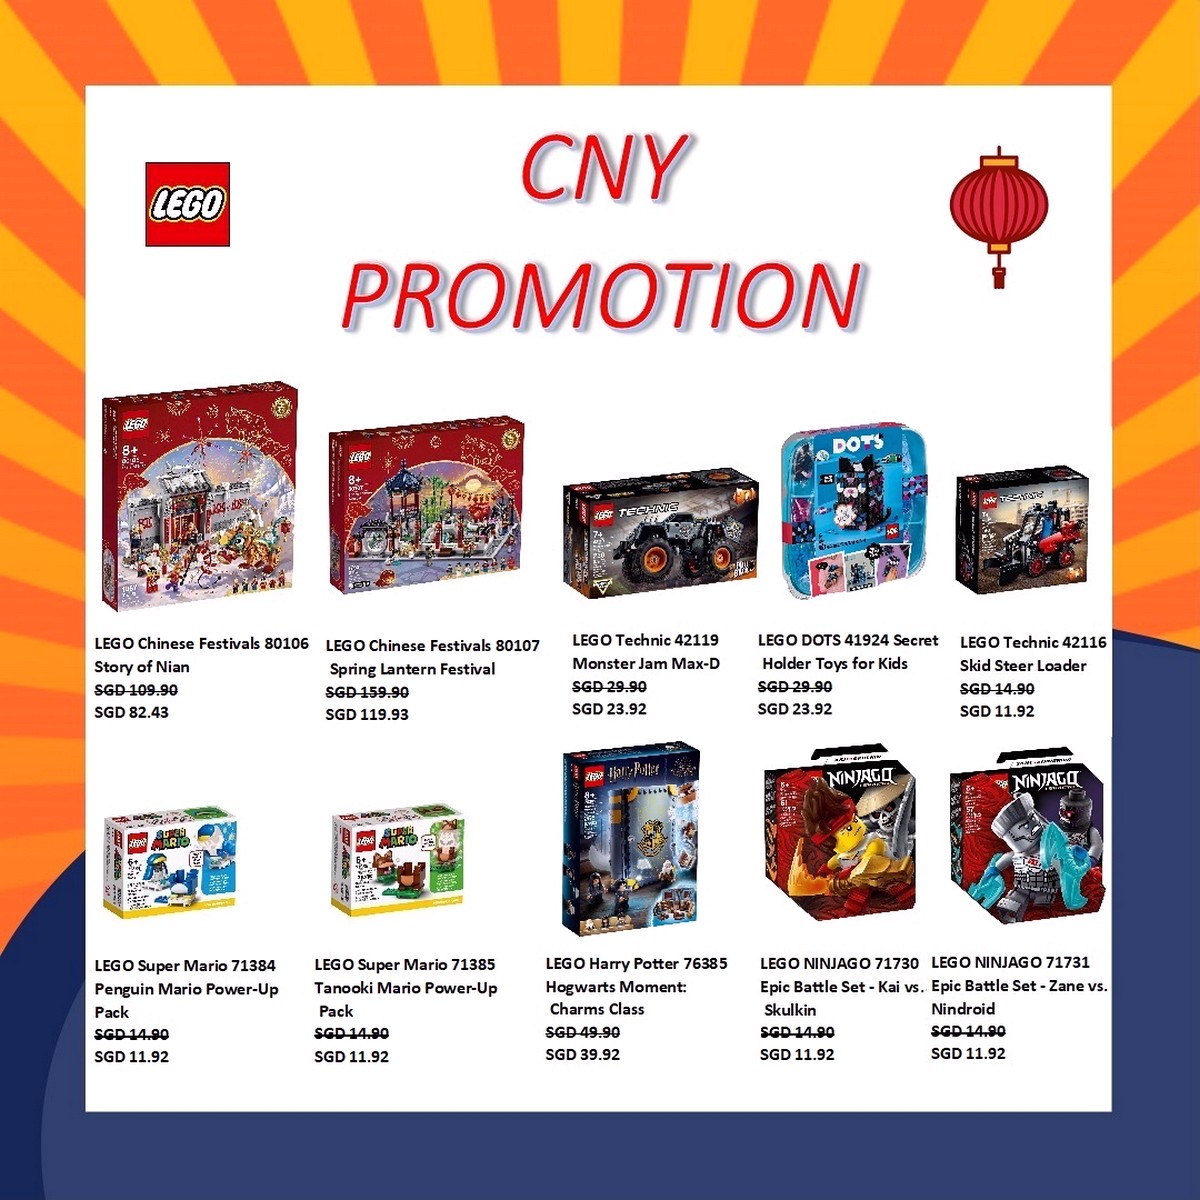 Lego-POP-1 12-28 Feb 2021: Bunny Box CNY Promotion Sale Up to 40% OFF LEGO, Nerf, Play-Doh, Transformers, Paw Patrol, Bakugan, Hatchimals, Monster Jam, My Little Pony, Twisty Petz, Kinetic Sand & More